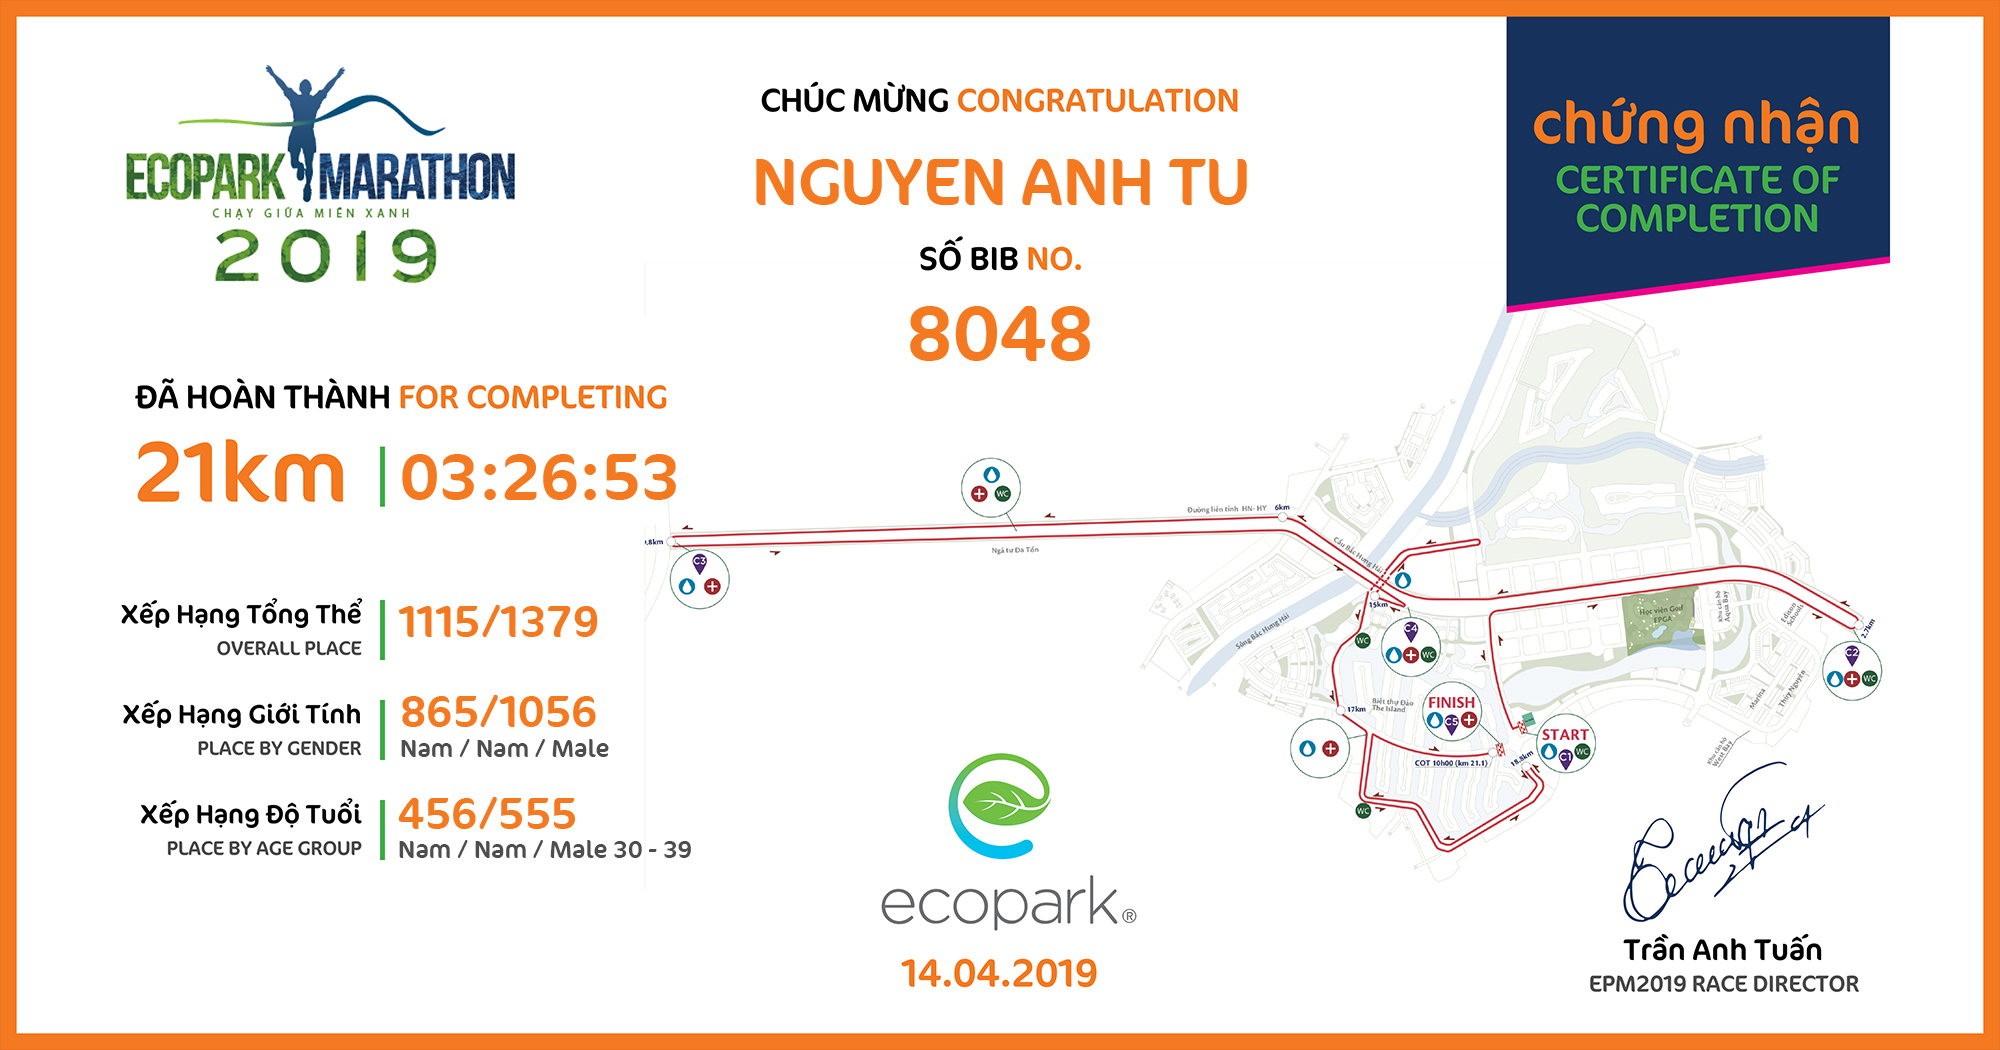 8048 - Nguyen Anh Tu